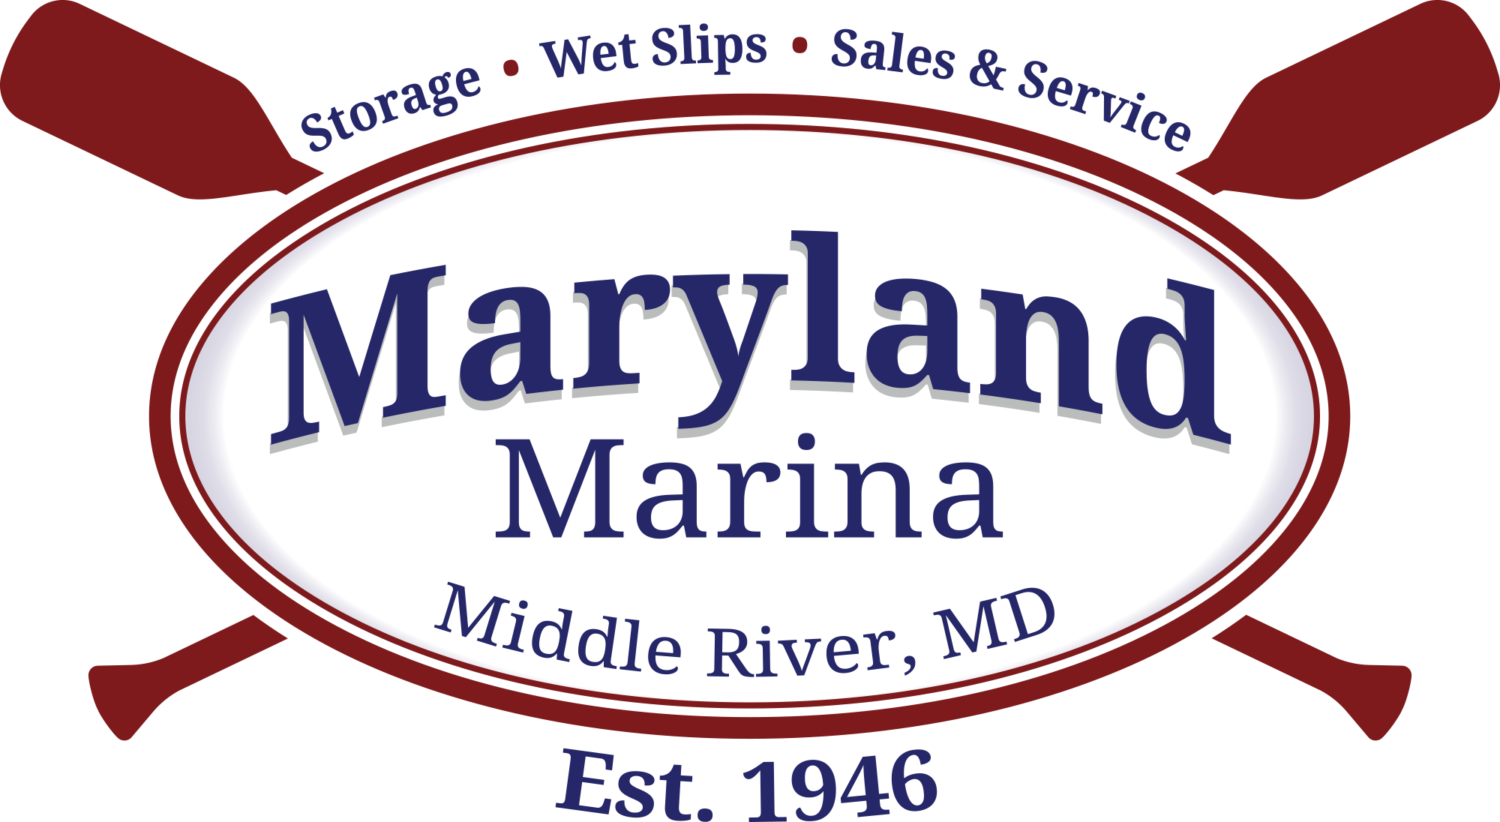 Marina Manager in Maryland